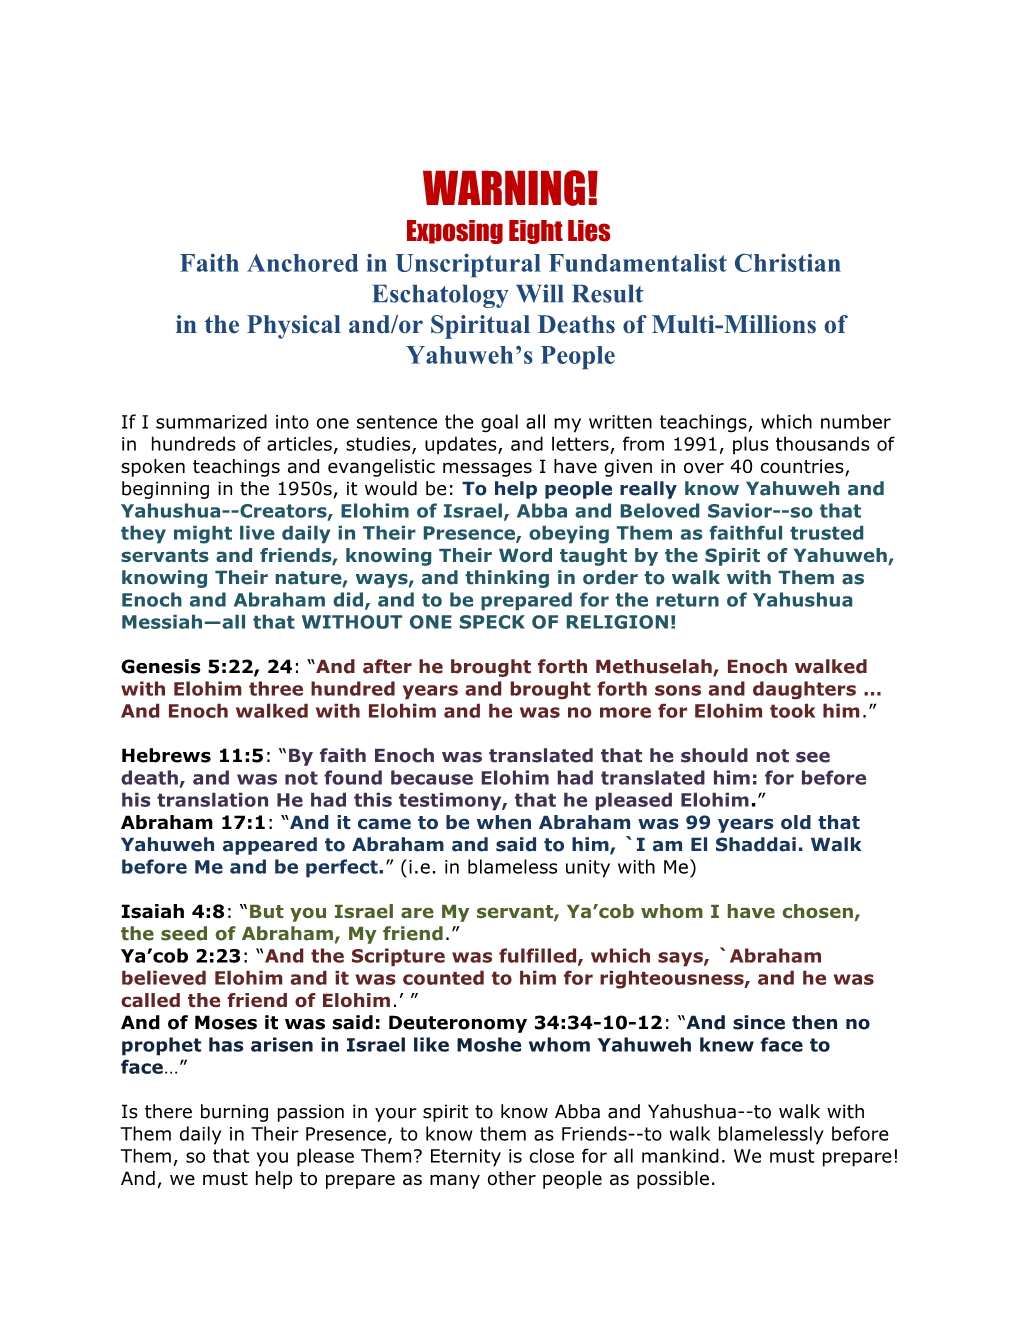 Faith Anchored in Unscriptural Fundamentalist Christian Eschatology Will Result